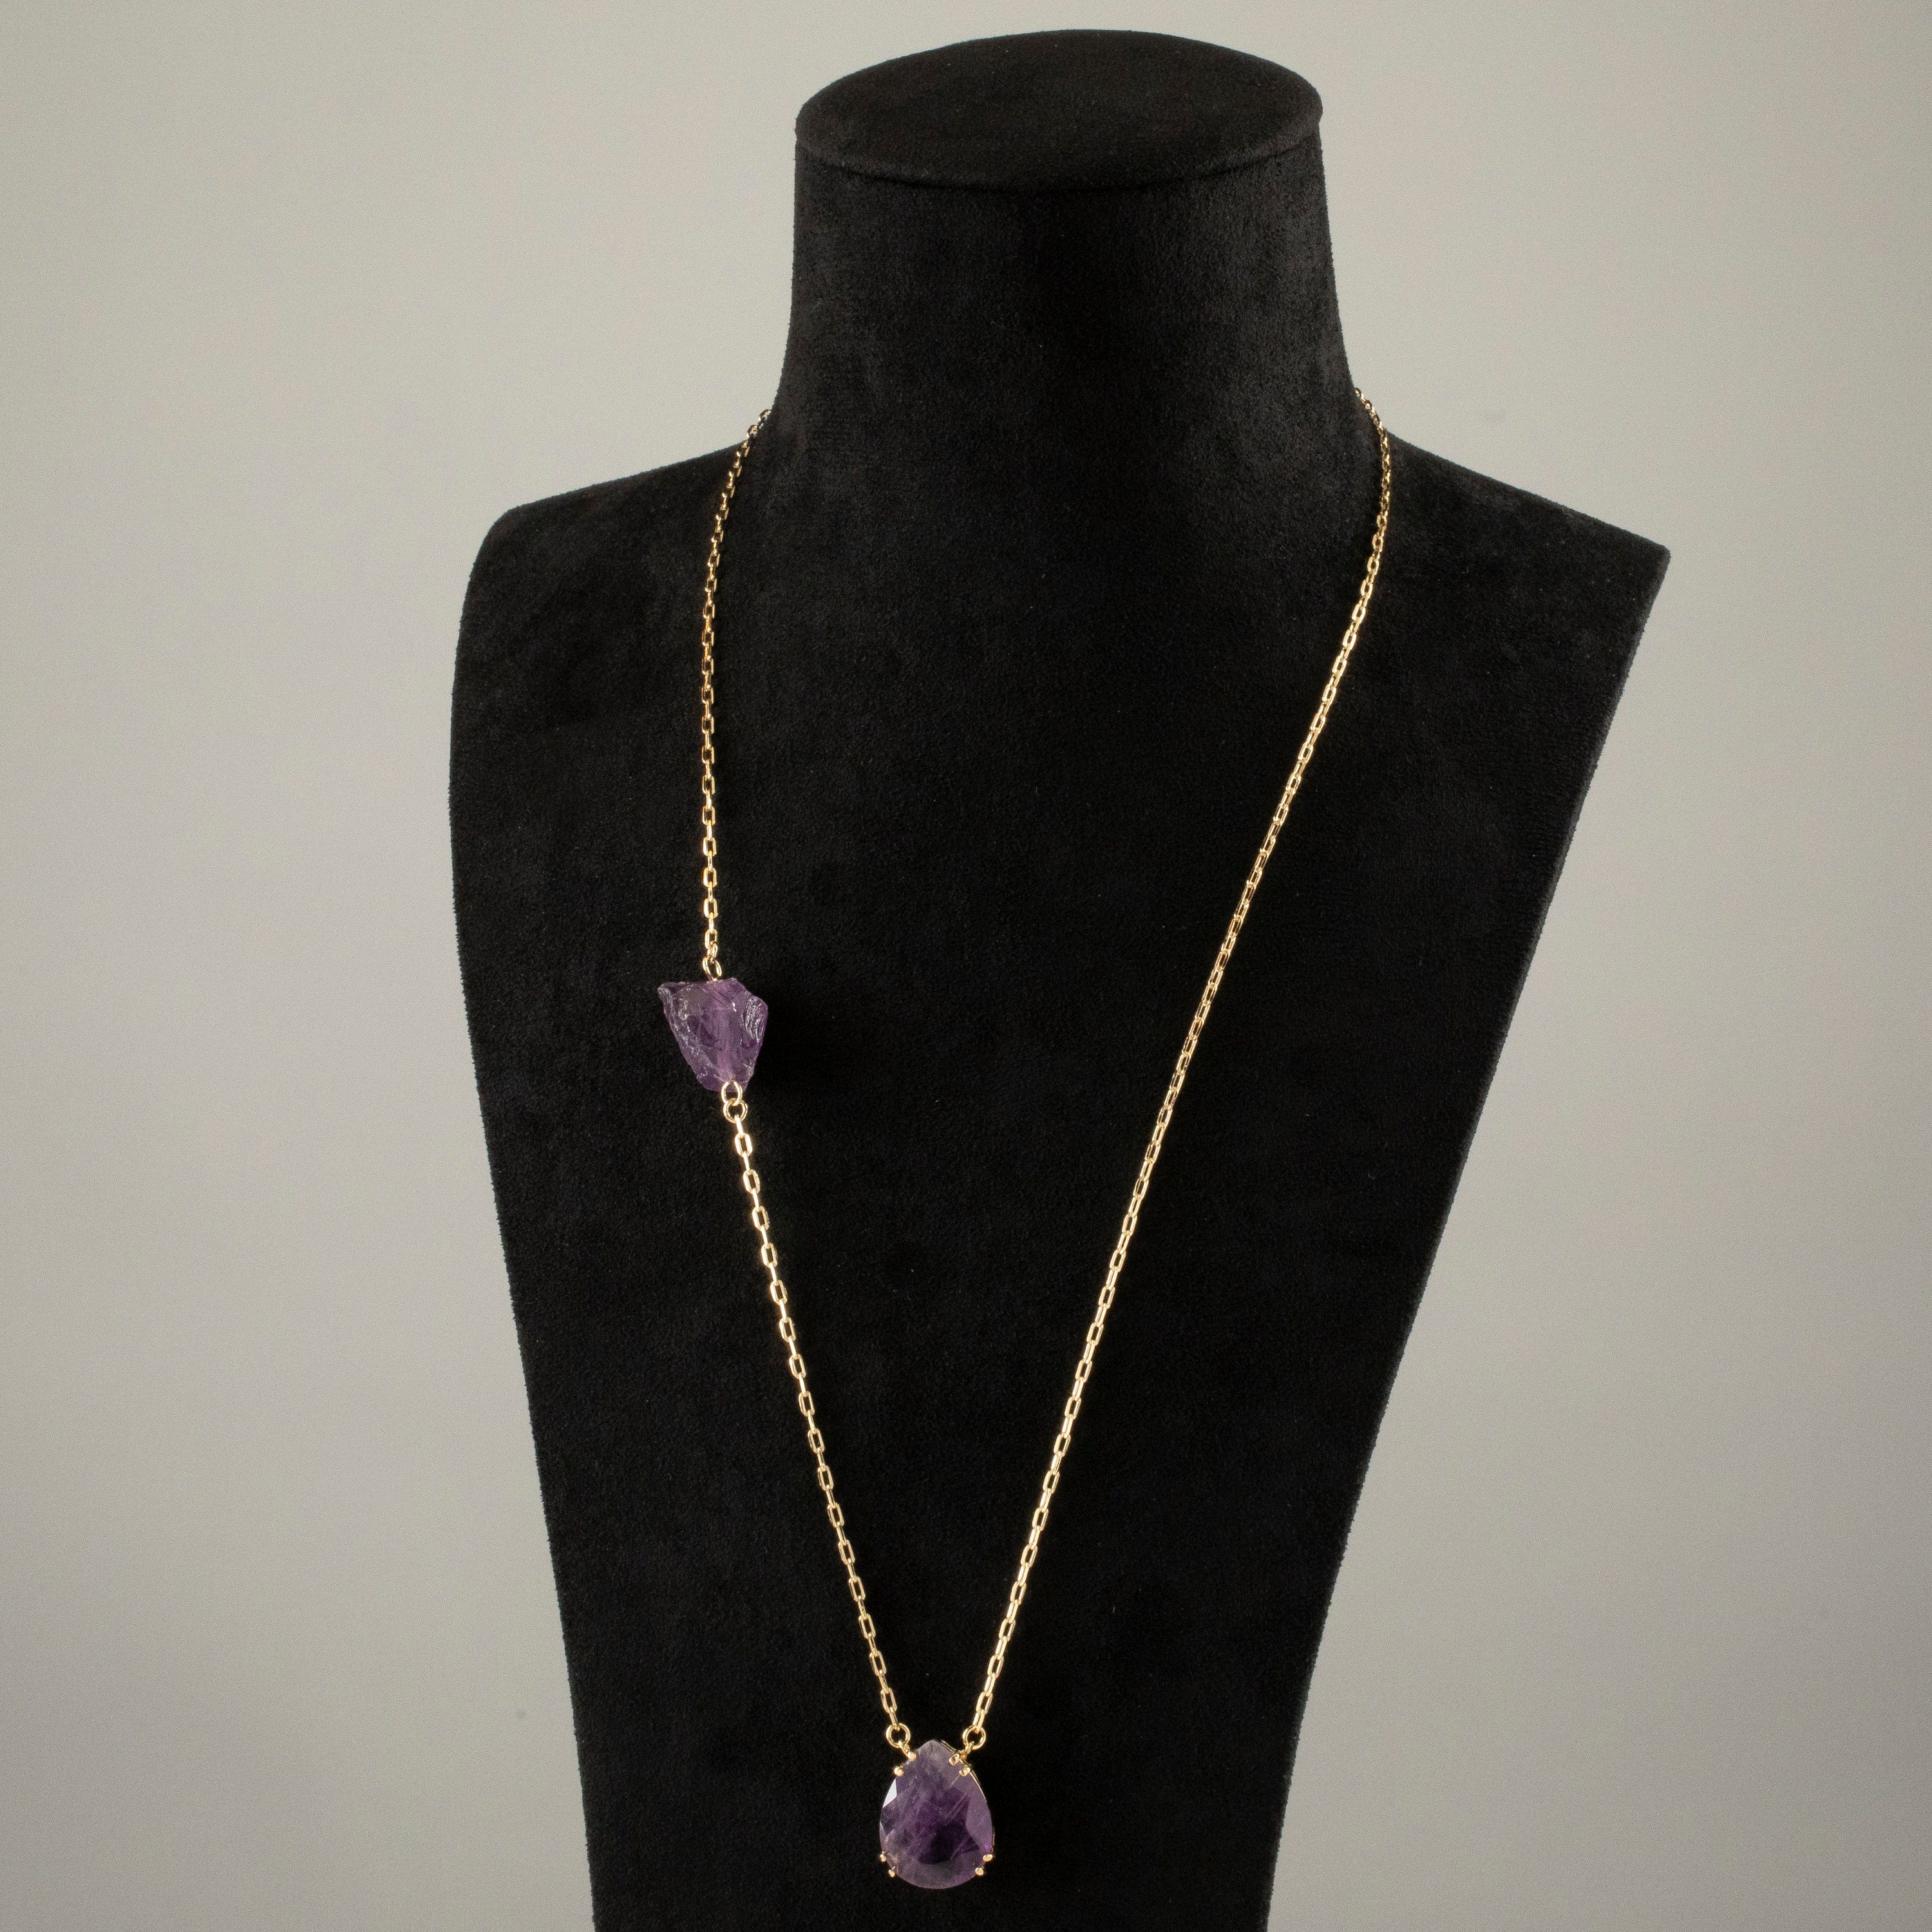 KALIFANO Crystal Jewelry Amethyst Drop Necklace CJN-2067-AM